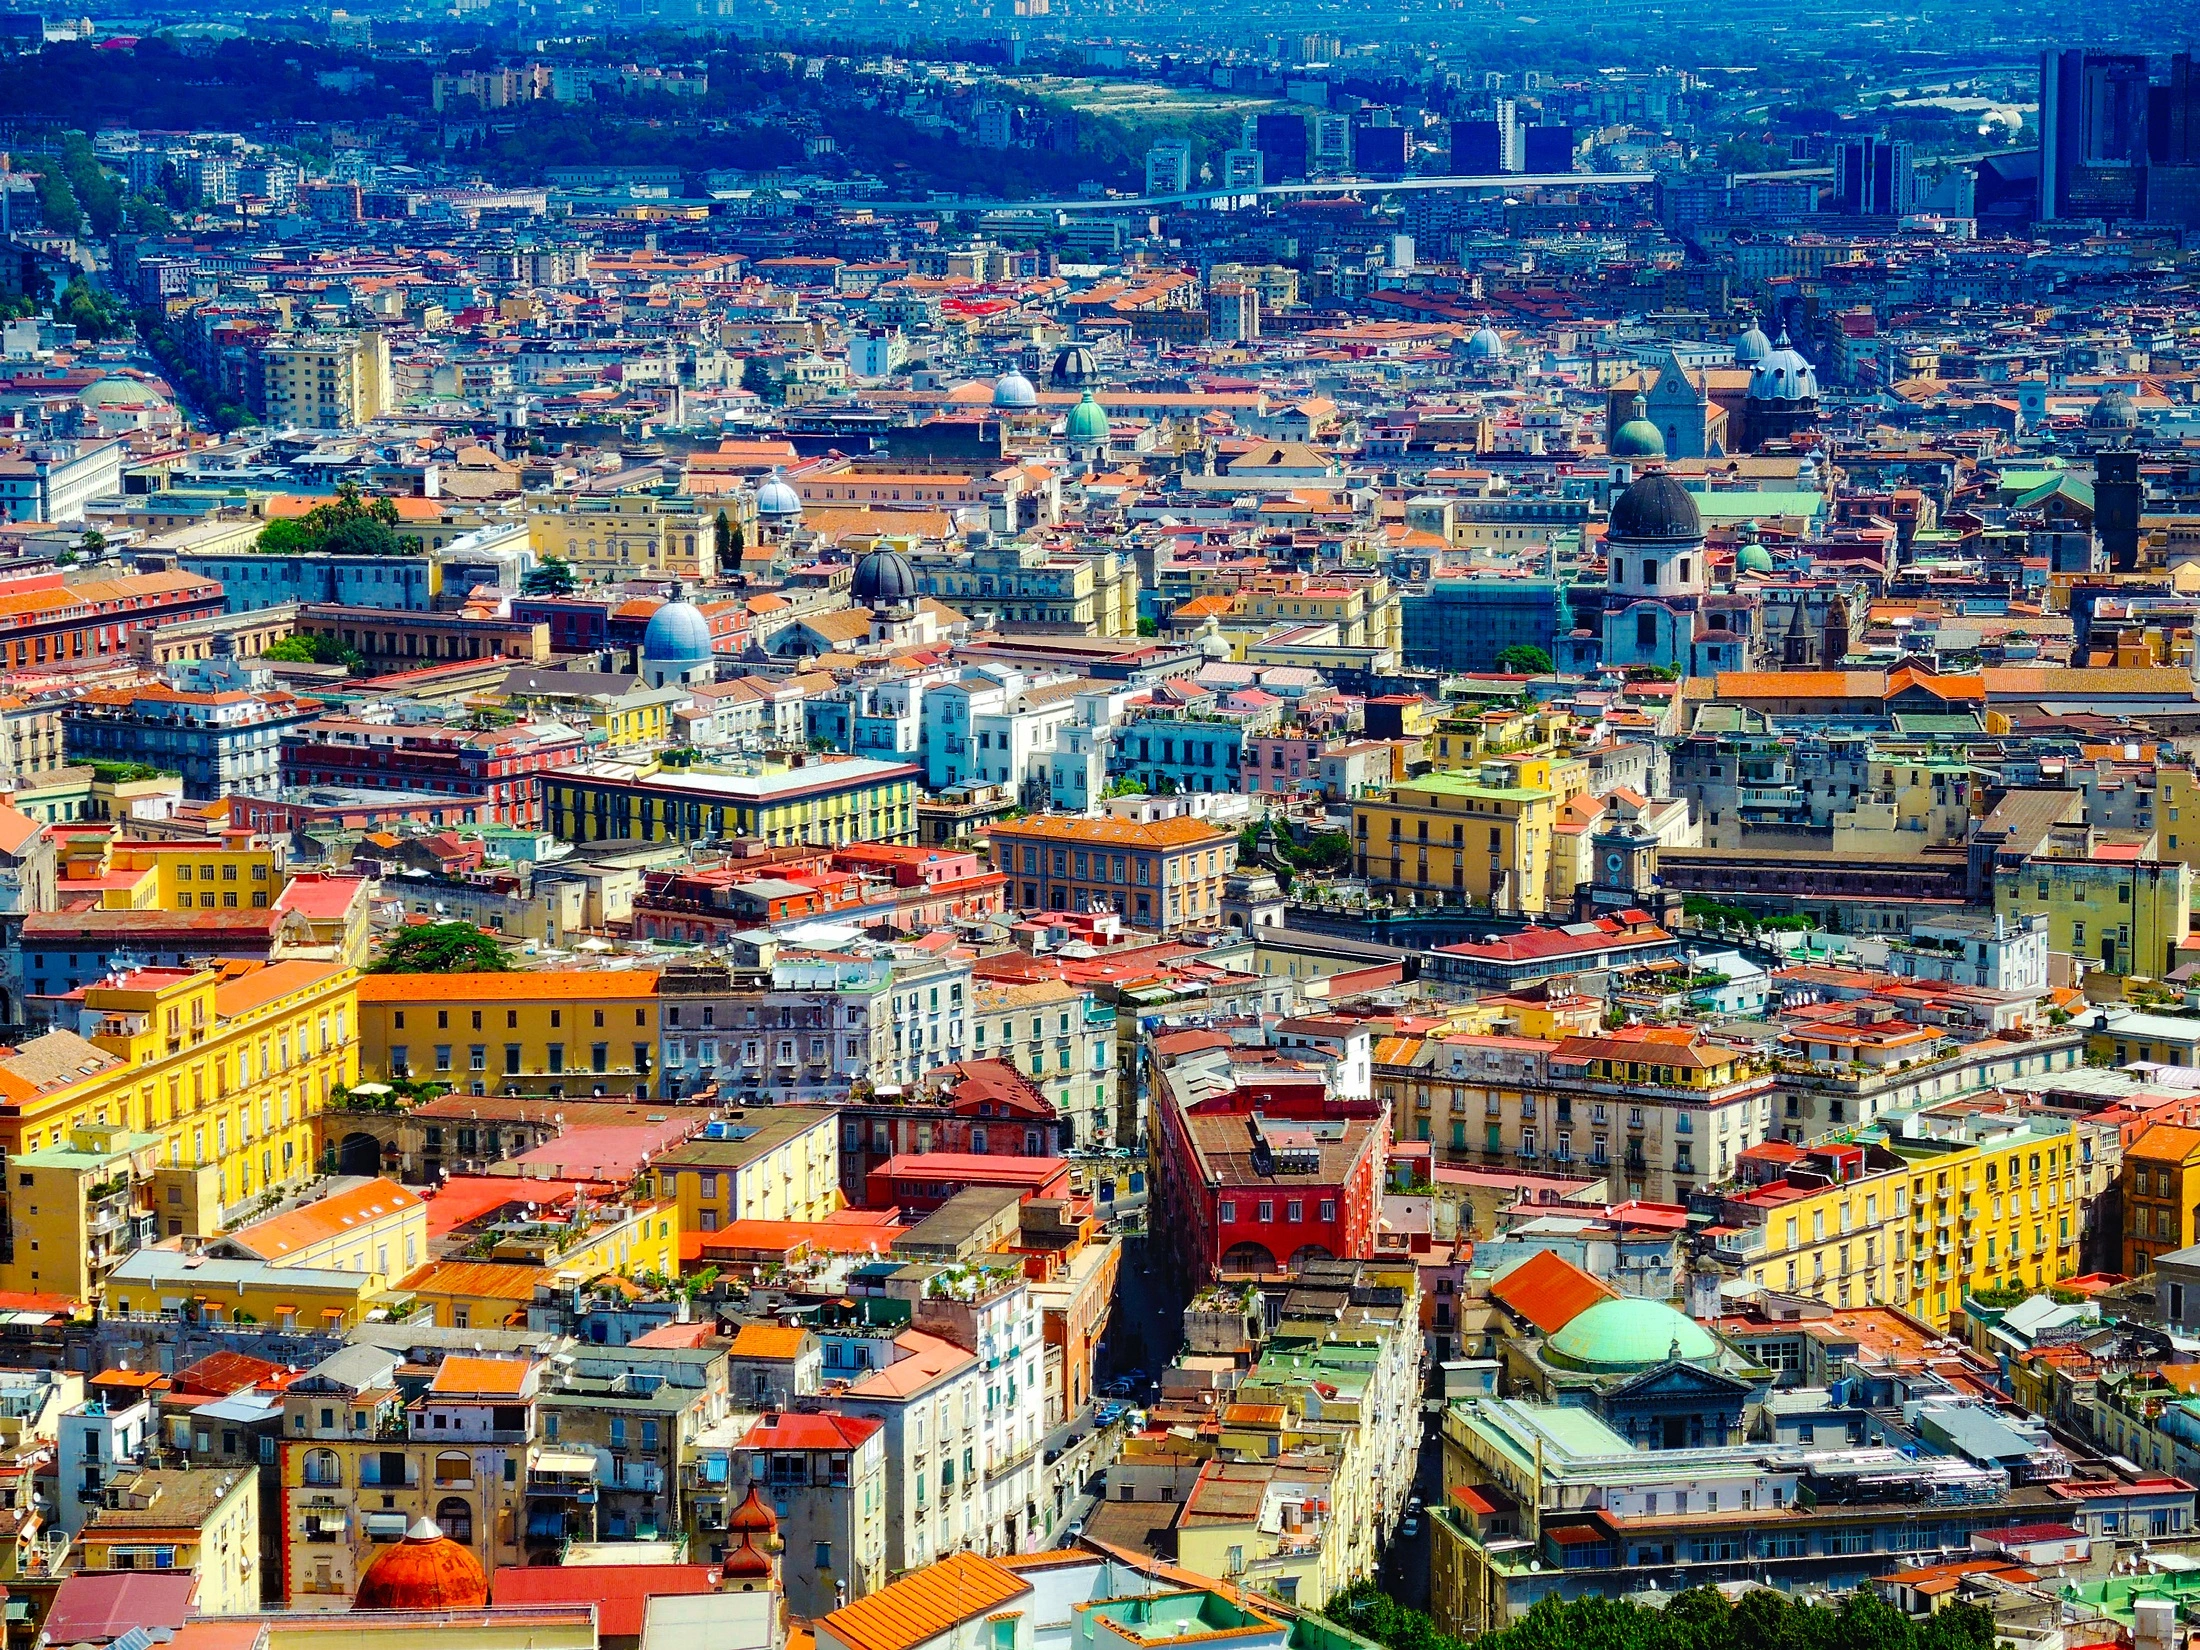 Napoli panorama